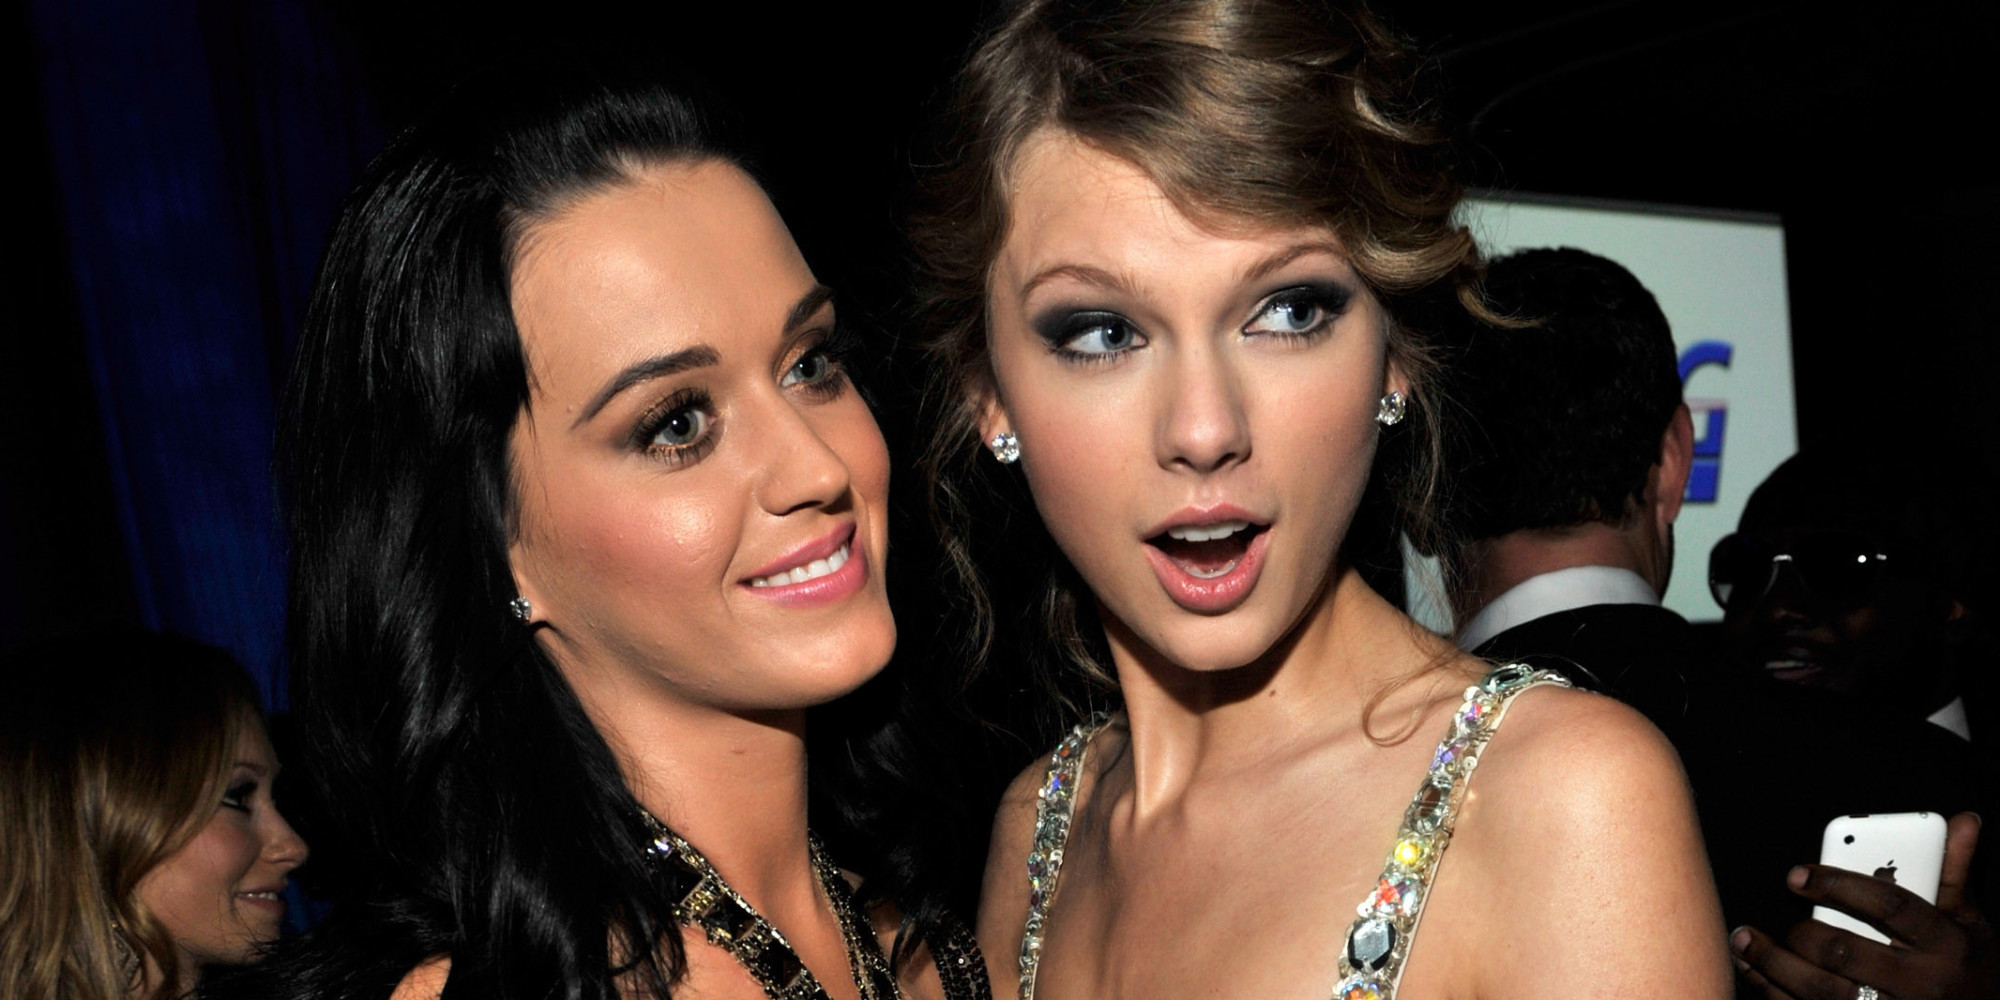 Katy Perry se grabó bailando “Famous” de Kanye West en la parte en que se menciona a Taylor Swift. Cúsica Plus